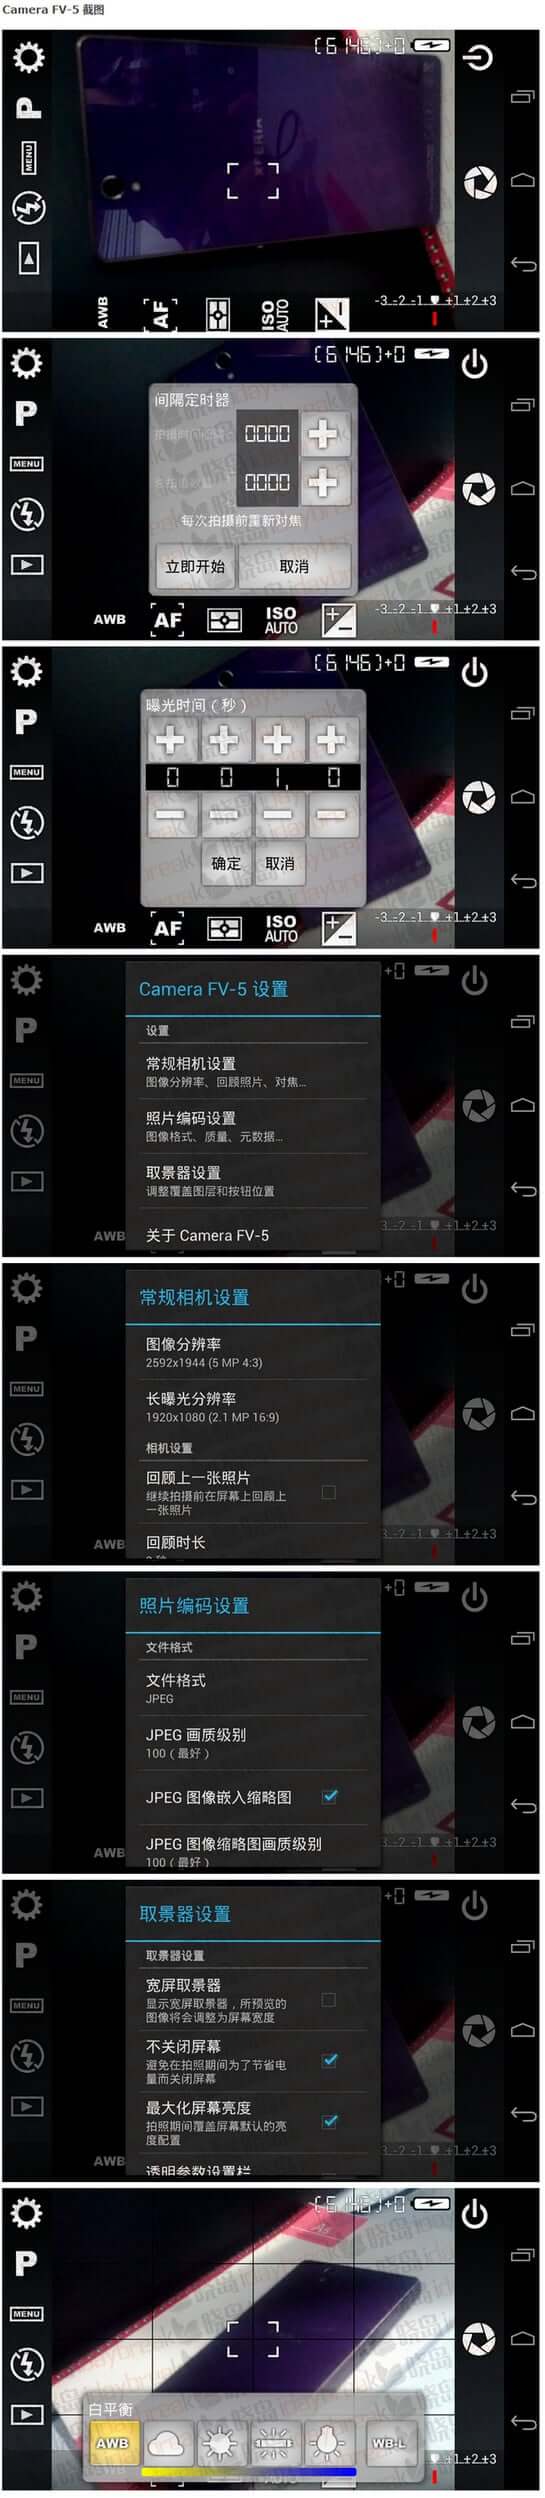 极致相机 Camera FV-5 v5.3.3.0 解锁付费版-无痕哥's Blog